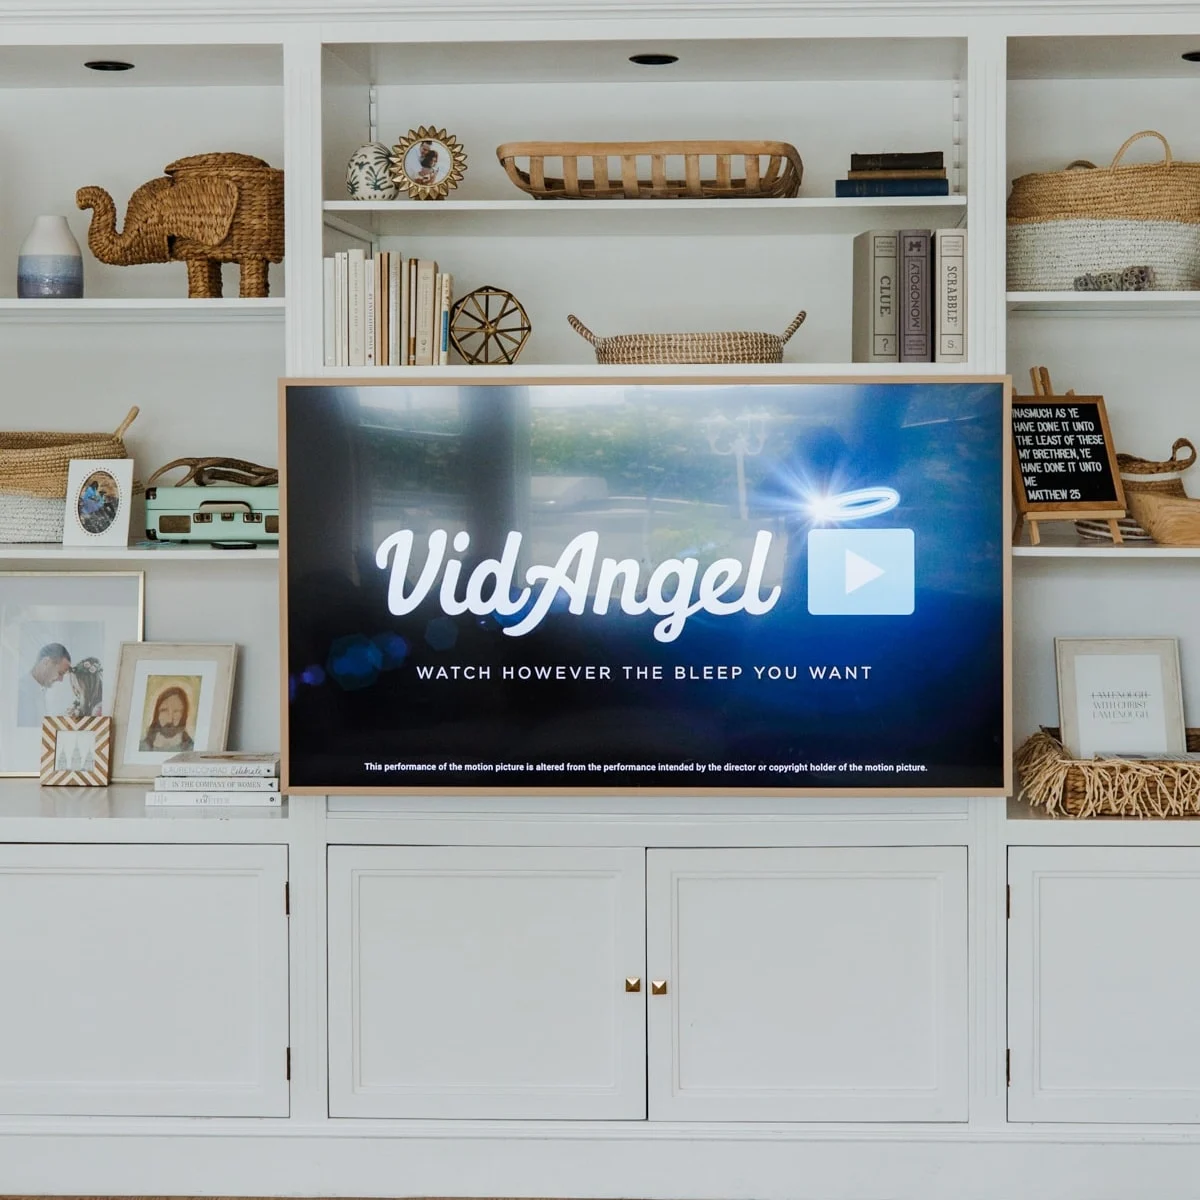 How To Watch Vidangel On TV